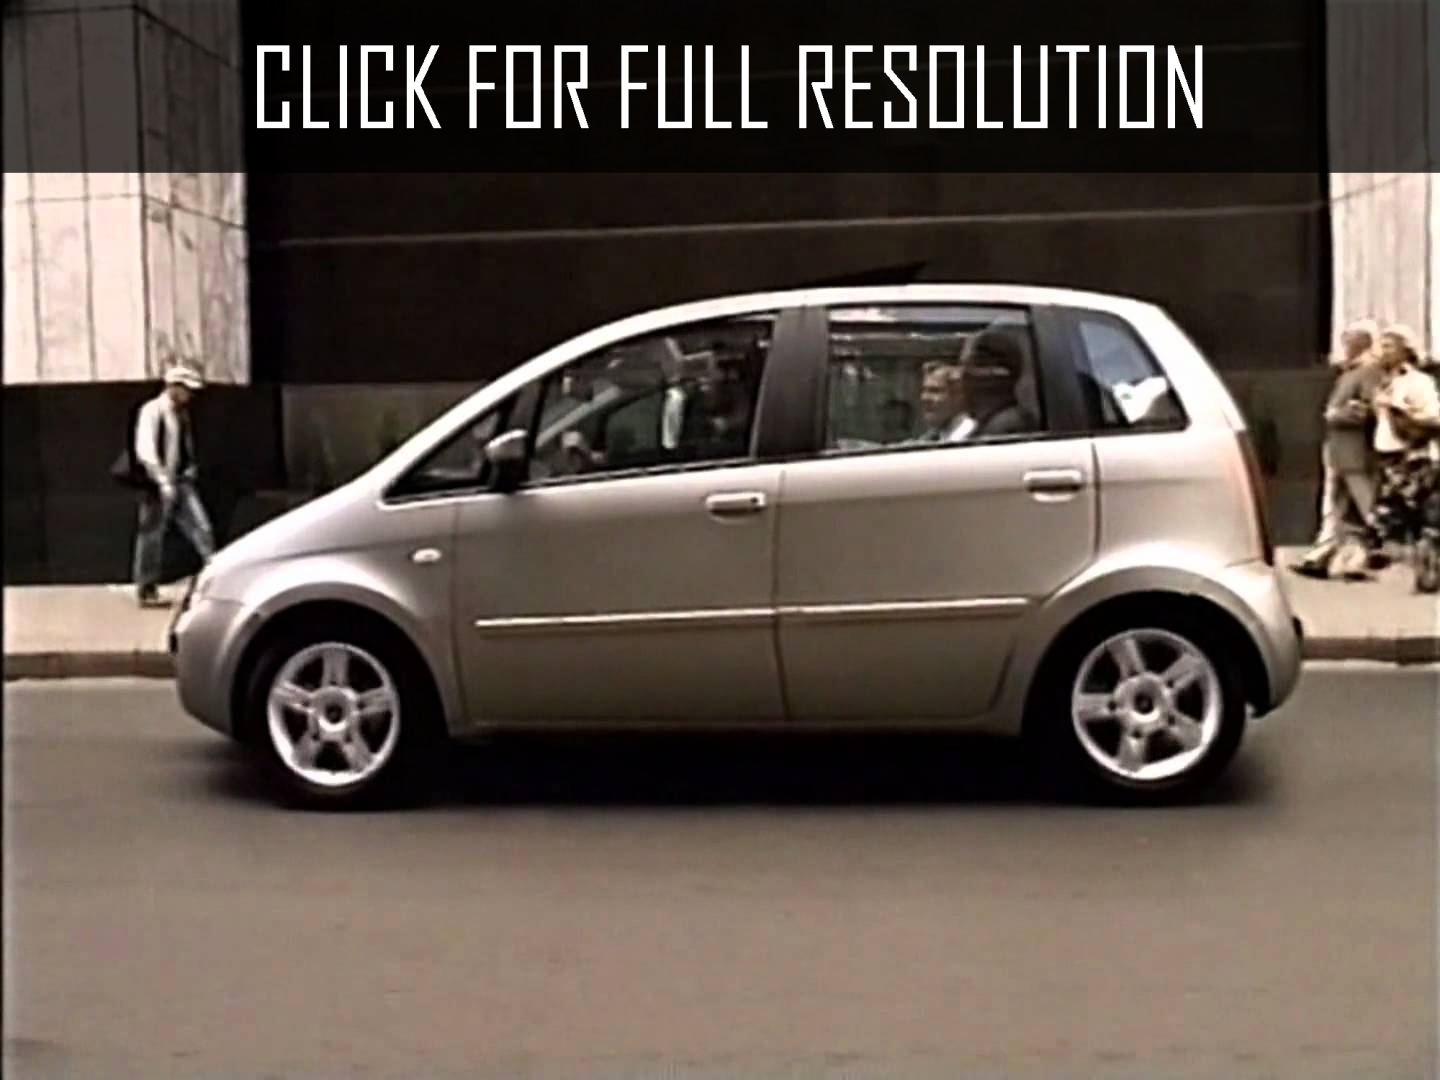 Fiat Idea 2004